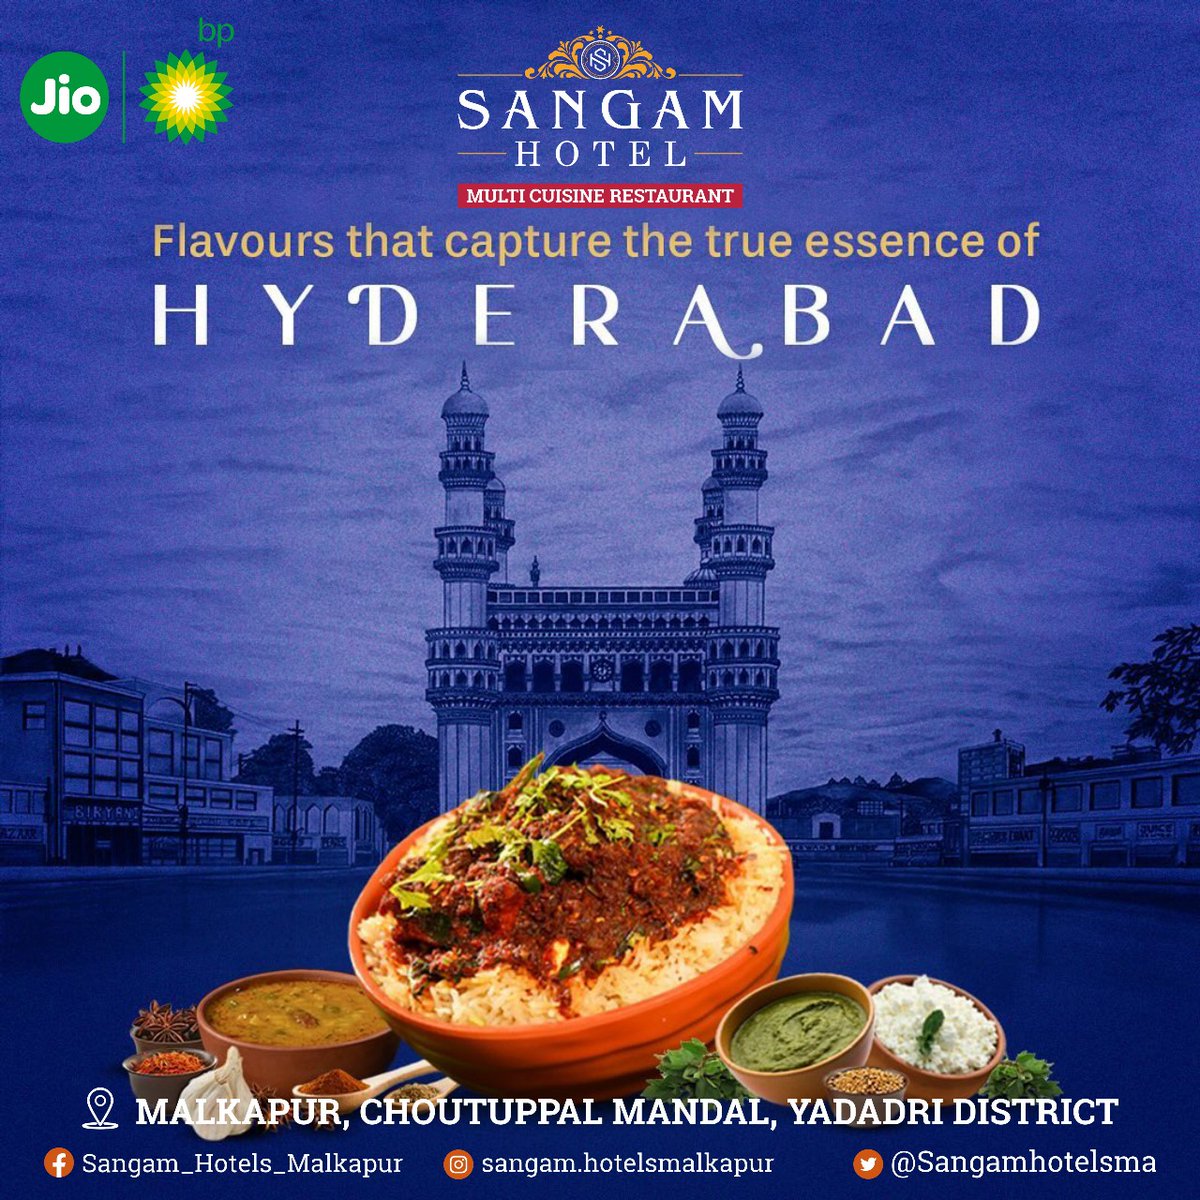 Flavours that Capture the true essence of Hyderabad! @Sangamhotelsma

#Chickenbiryani #nonveg #biryanilovers #muttonbiryani #food #foodie #foodporn #instafood #lunch #healthyfood #yummy #foodphotography #delicious #brunch #dinner #coffee #foodblogger #foodstagram #homemade